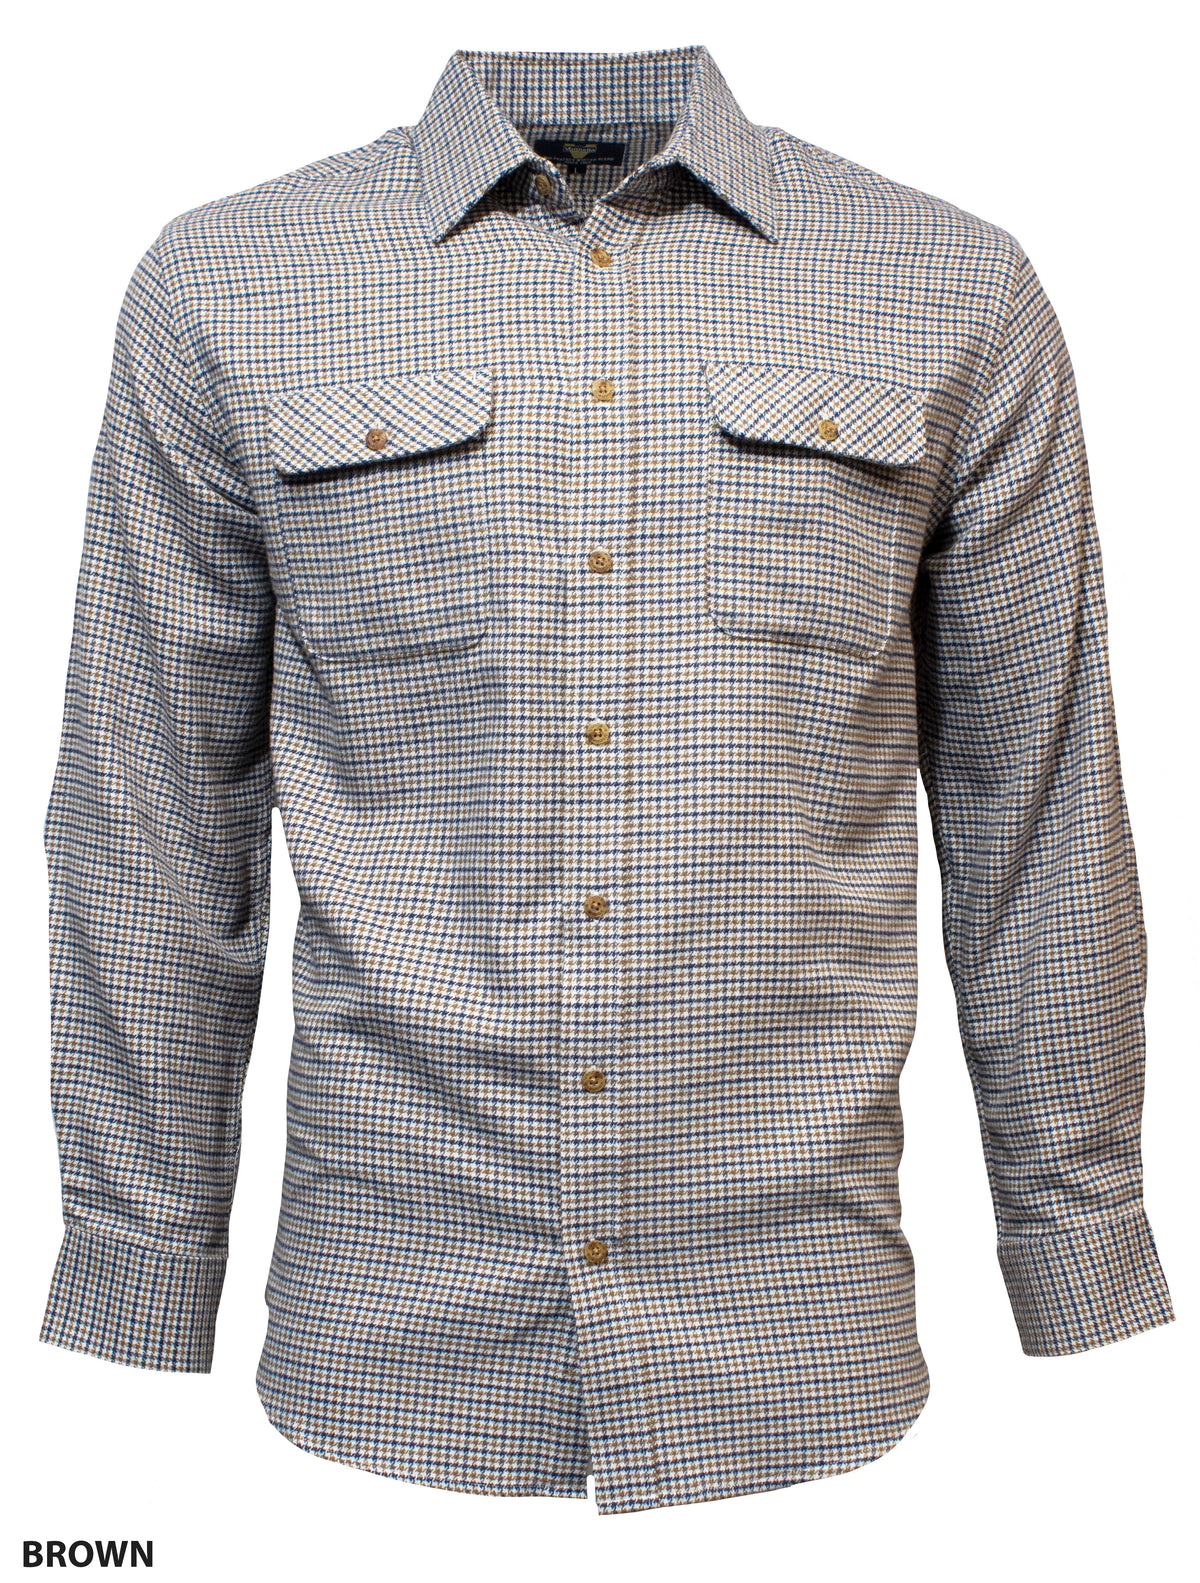 Vonnella Neat Shirt - Mainstreet Clothing